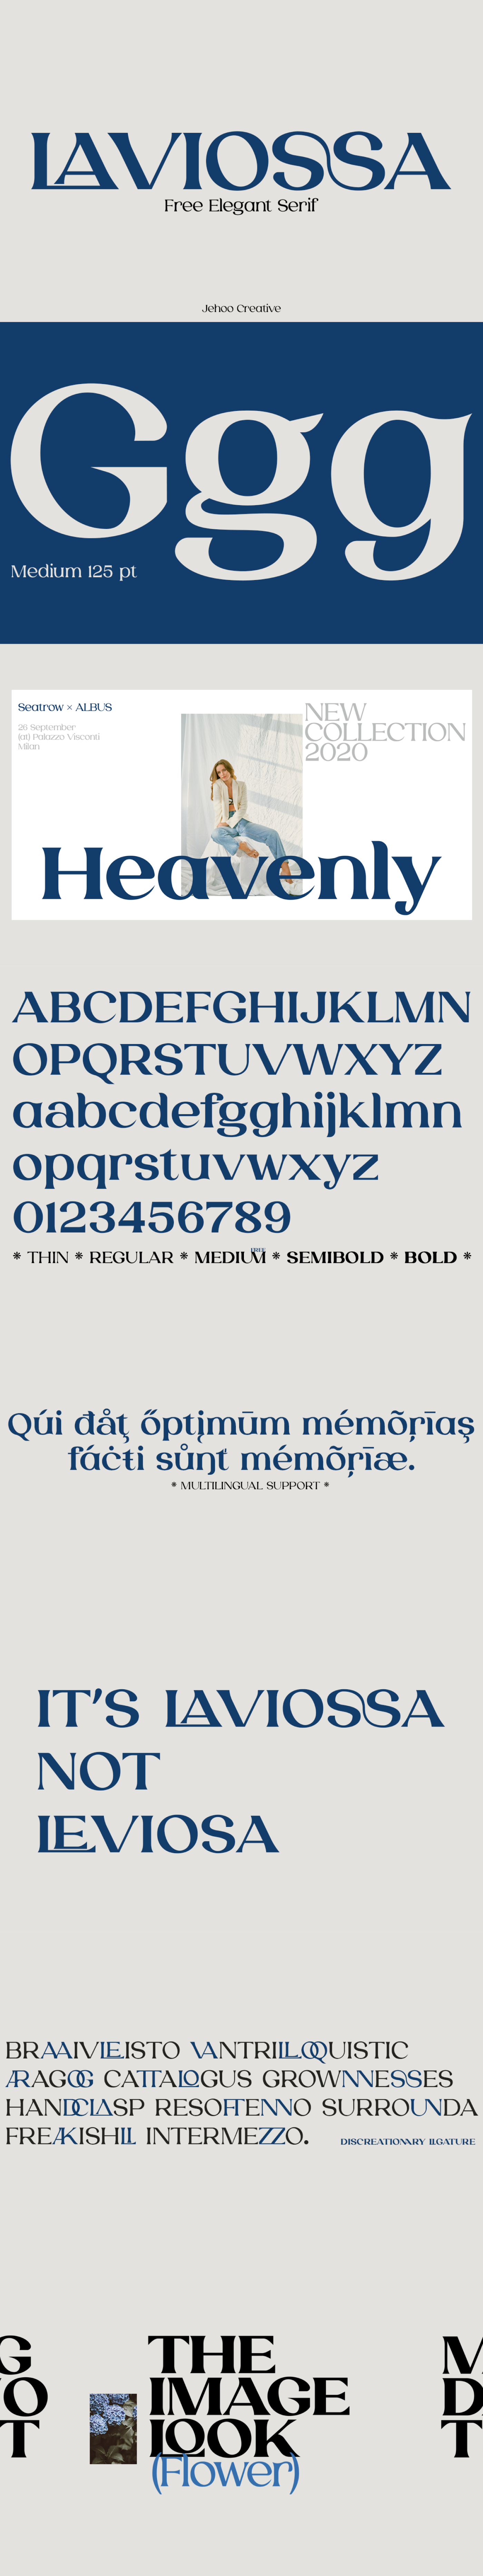 elegent font free free serif freebie logo modern poster serif type